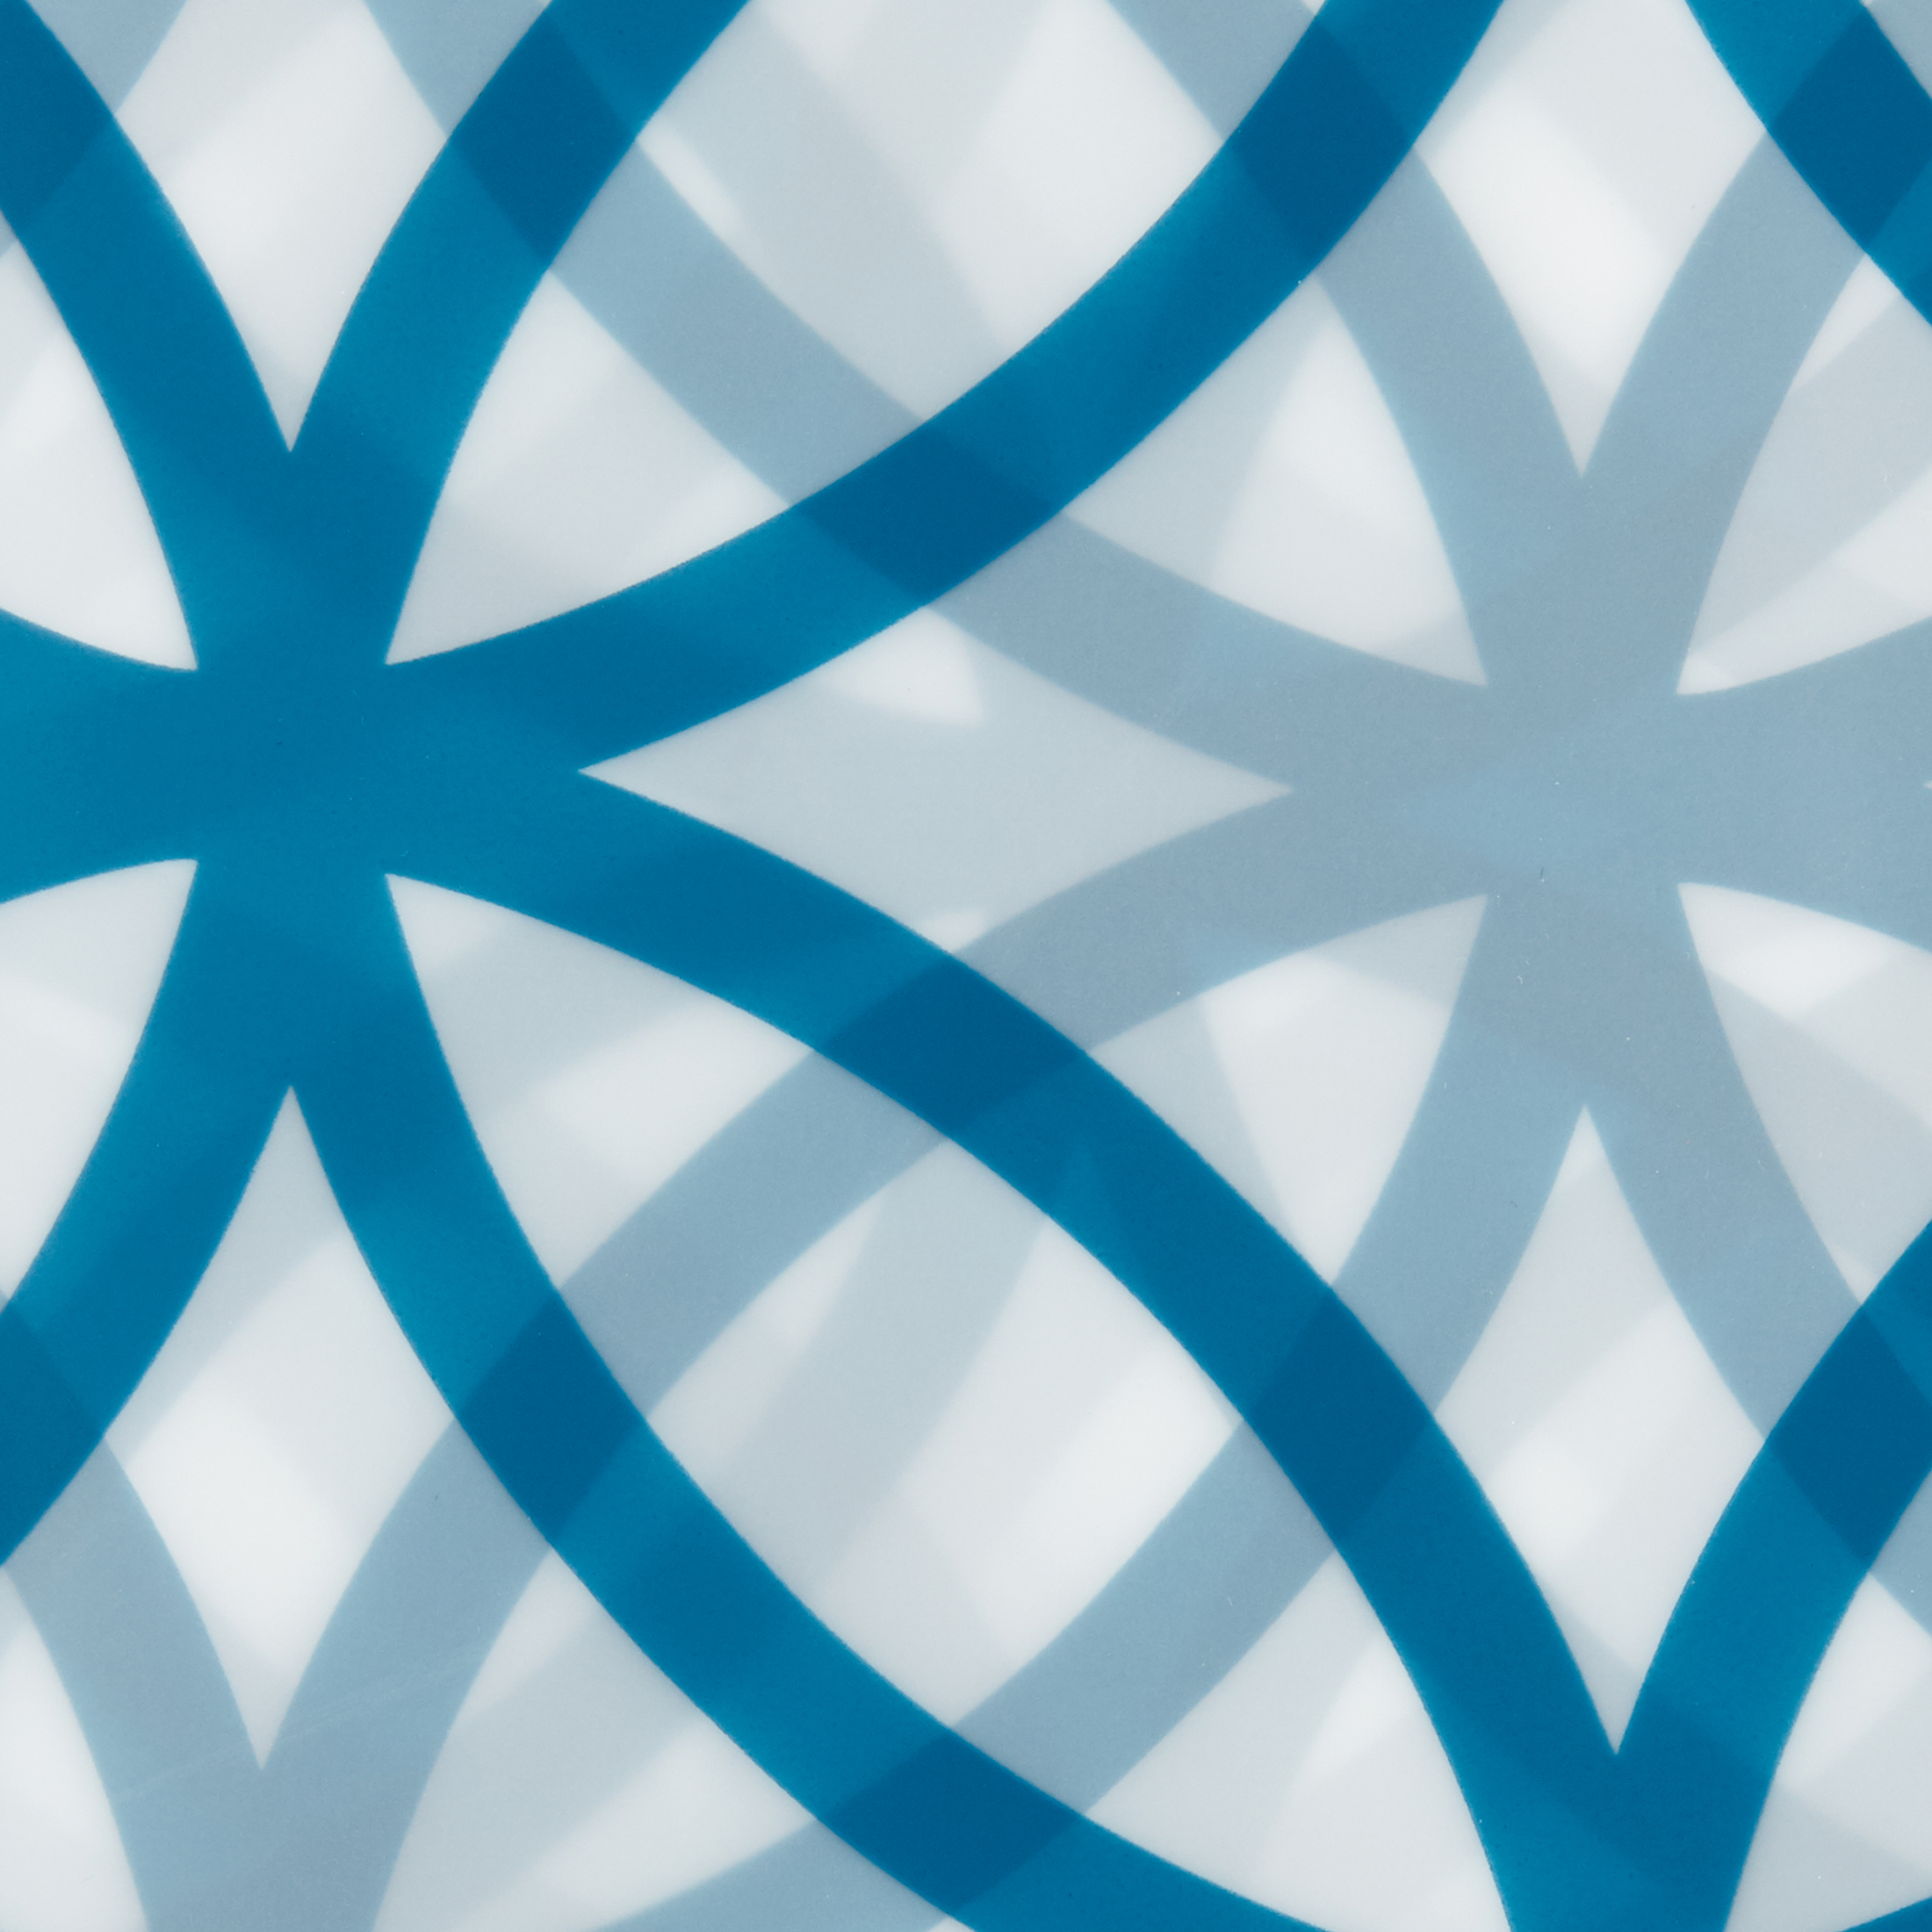 Teal and Blue PEVA Shower Curtain, 70" x 72", Mainstays Hadley Geometric, Waterproof - image 2 of 9